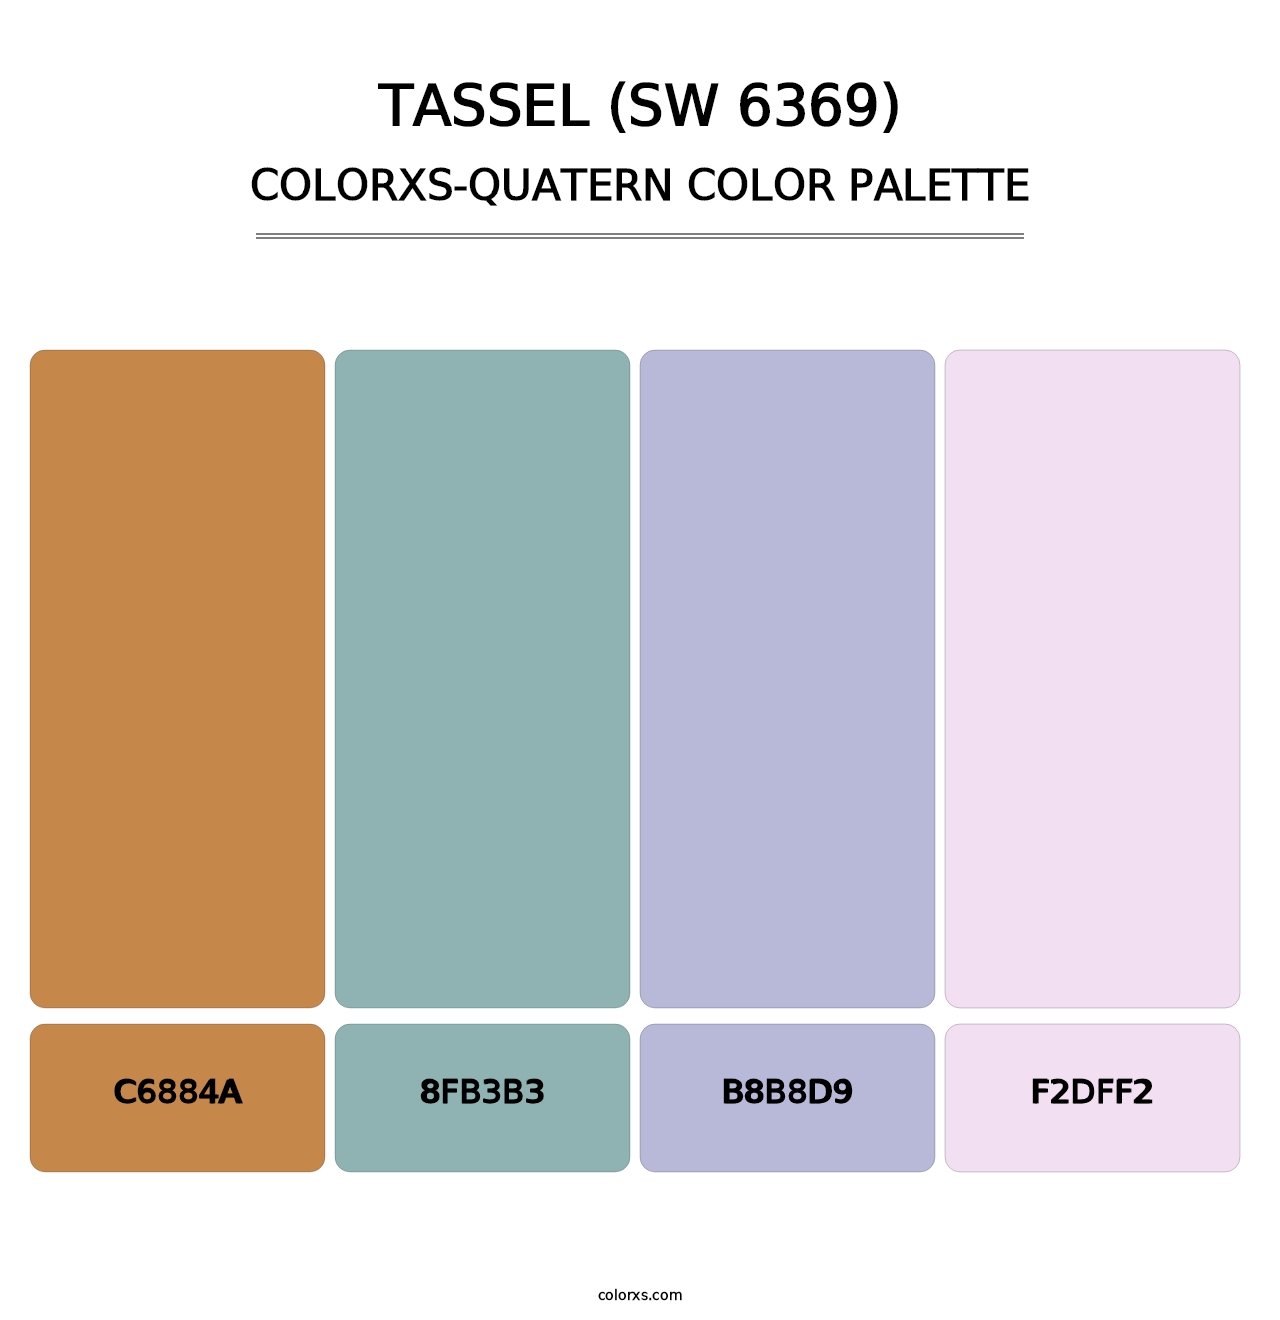 Tassel (SW 6369) - Colorxs Quatern Palette